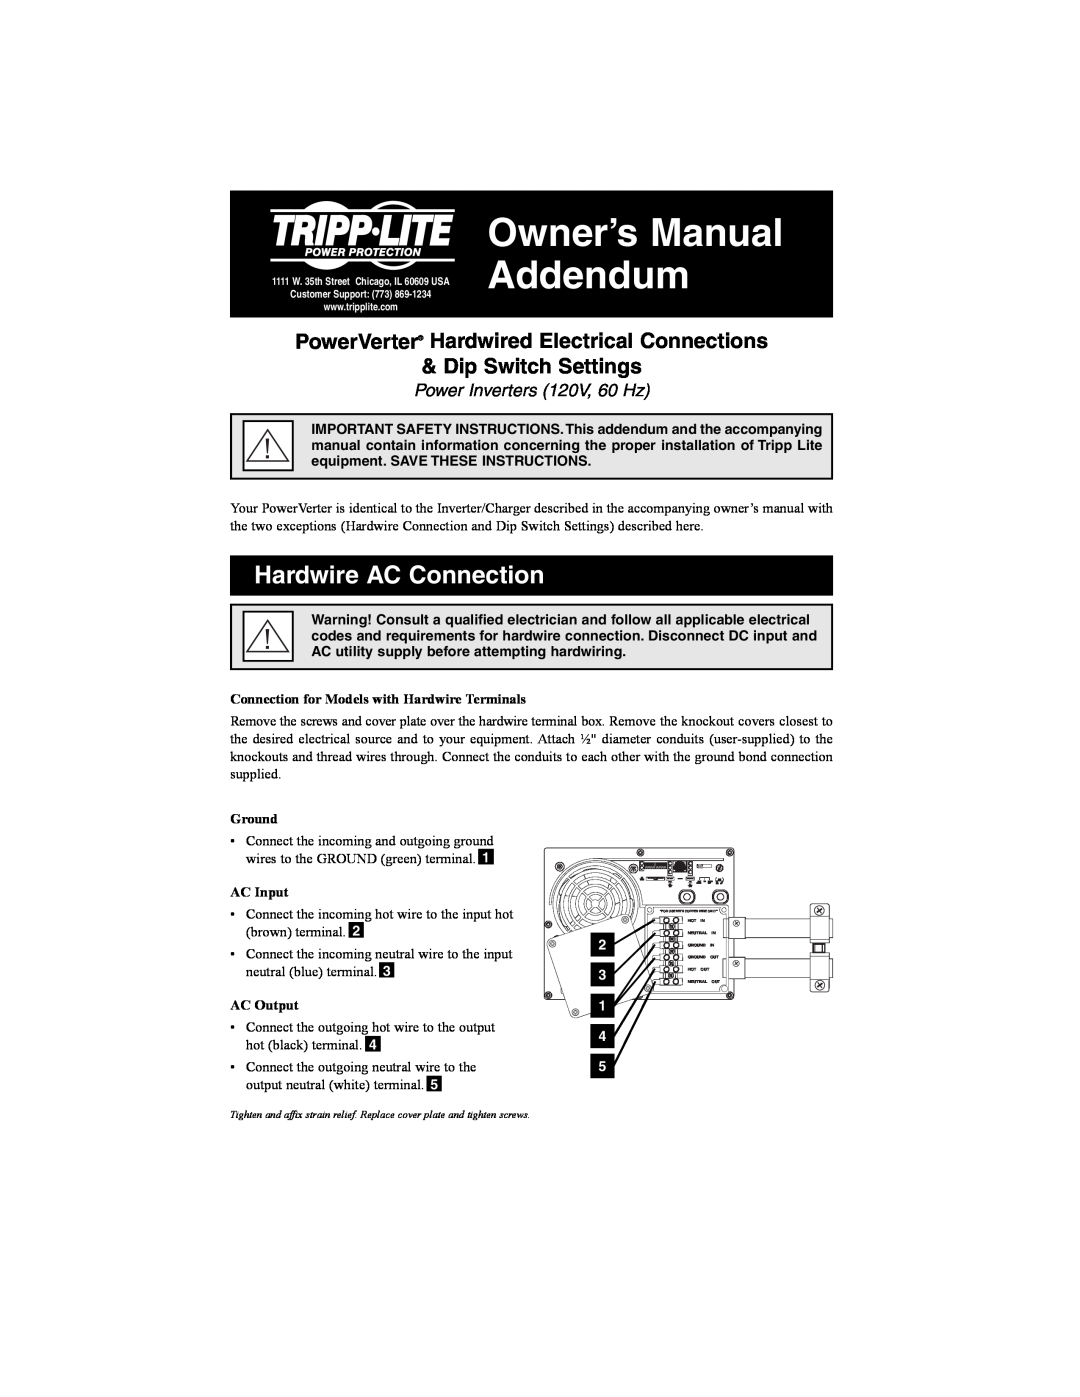 Tripp Lite owner manual Hardwire AC Connection, Owner’s Manual Addendum, Power Inverters 120V, 60 Hz 